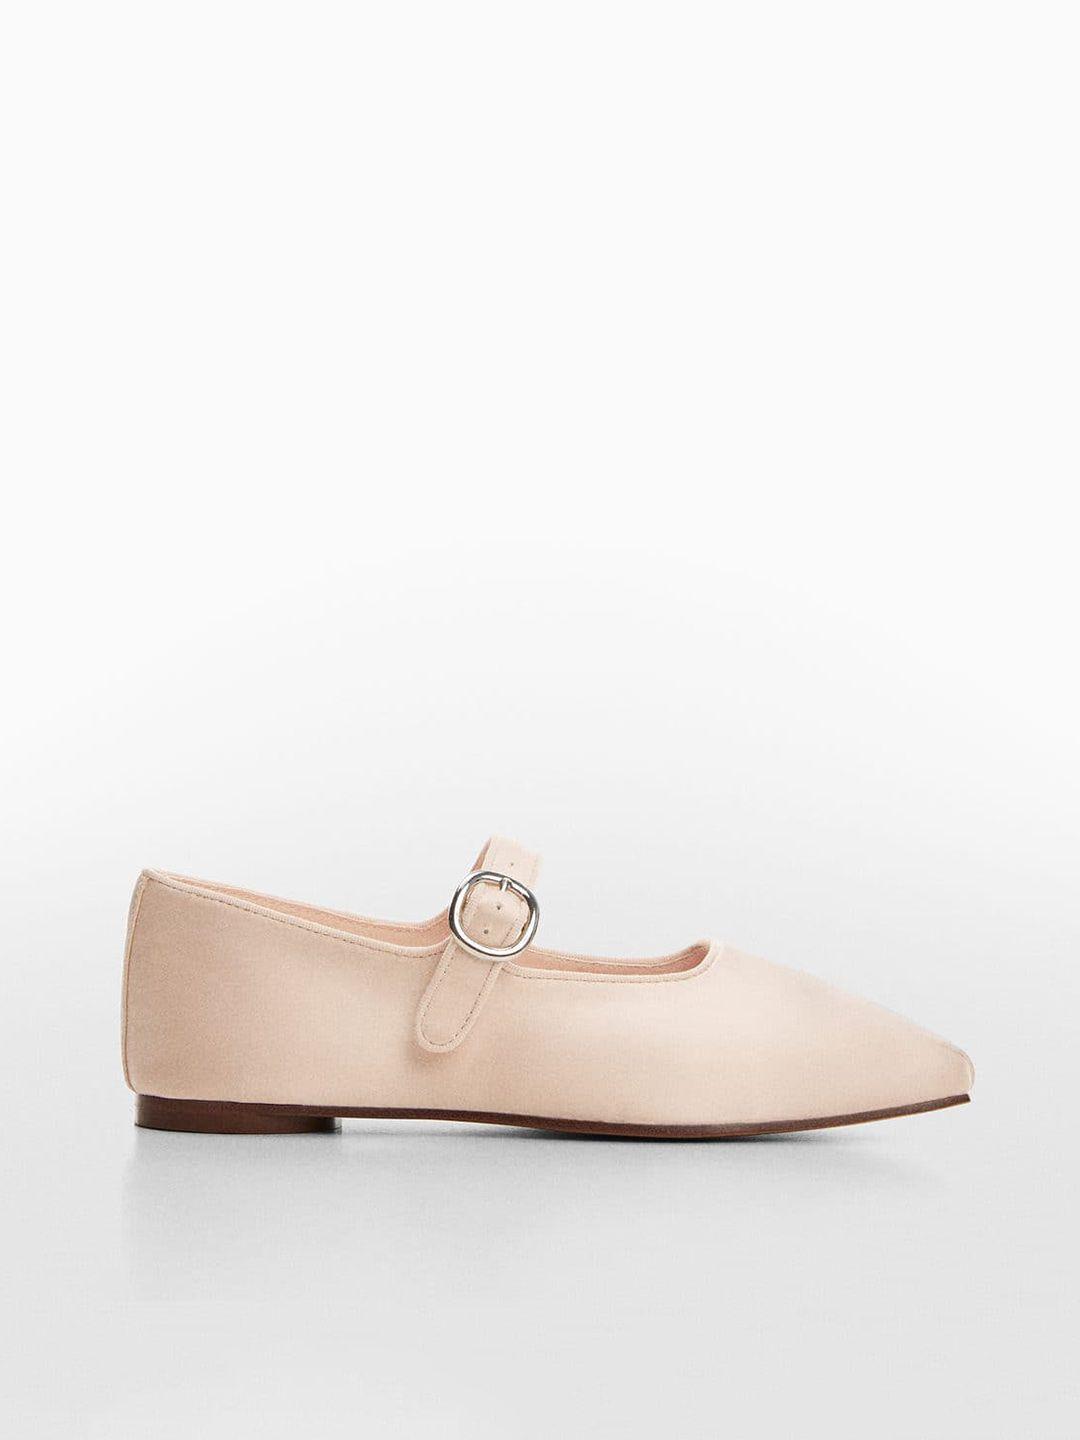 mango-women-buckle-detail-square-toe-satin-finish-mary-jane-shoes